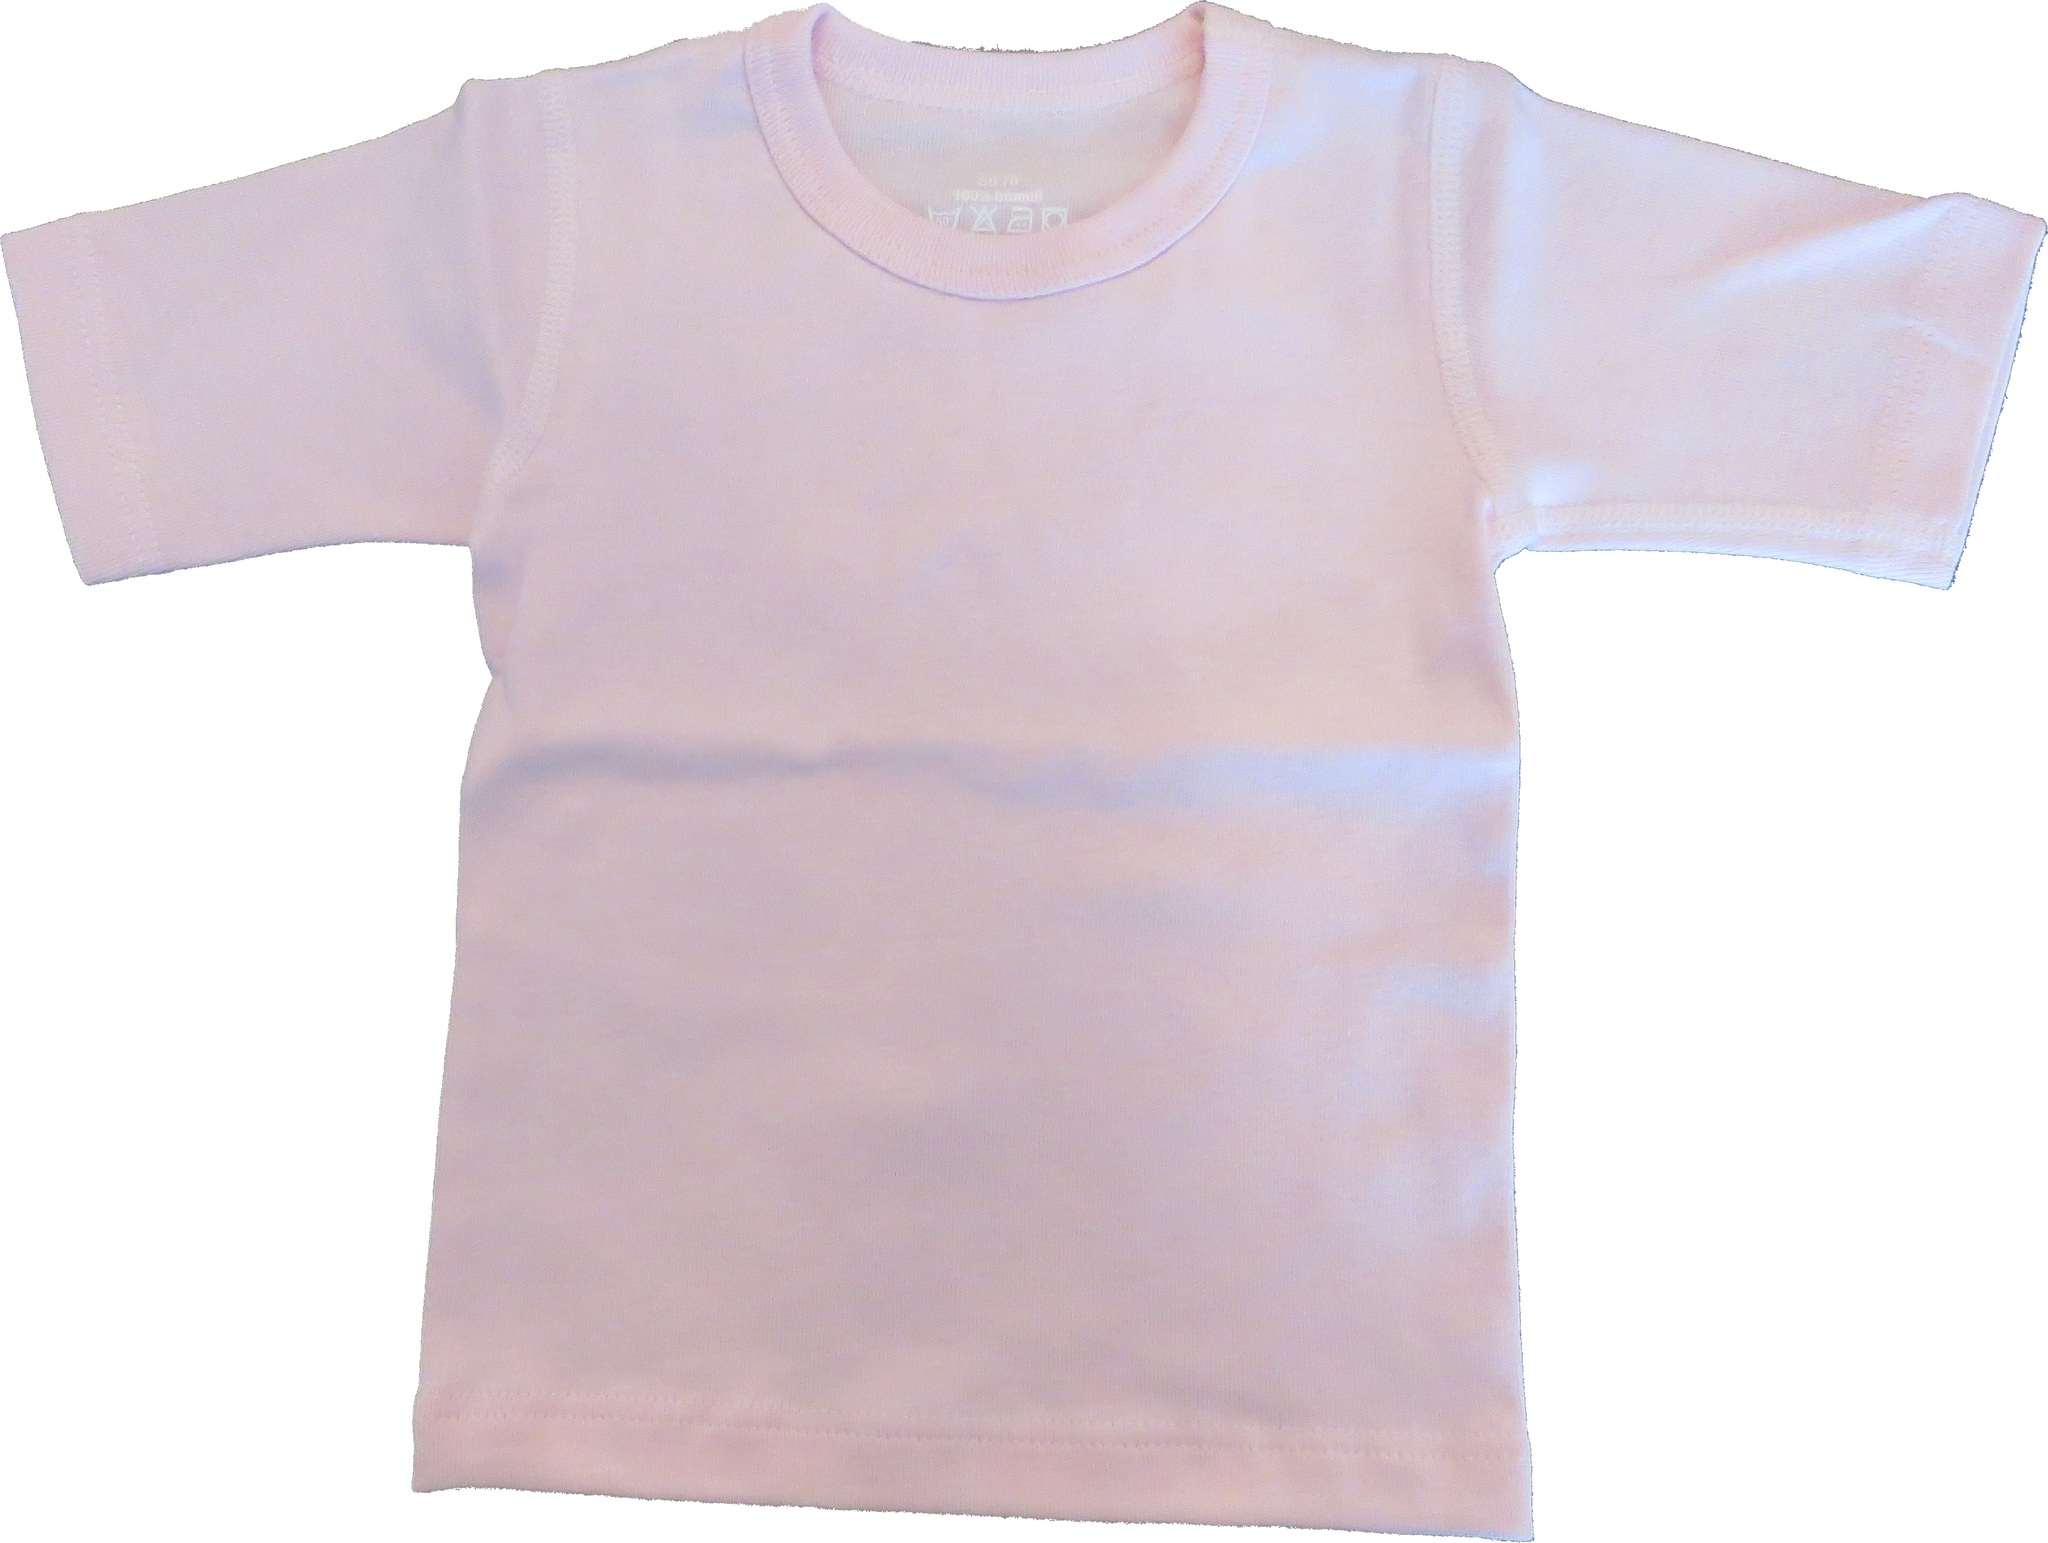 Basic t-shirt kortärmad ljusrosa 70/80, 100/110cl